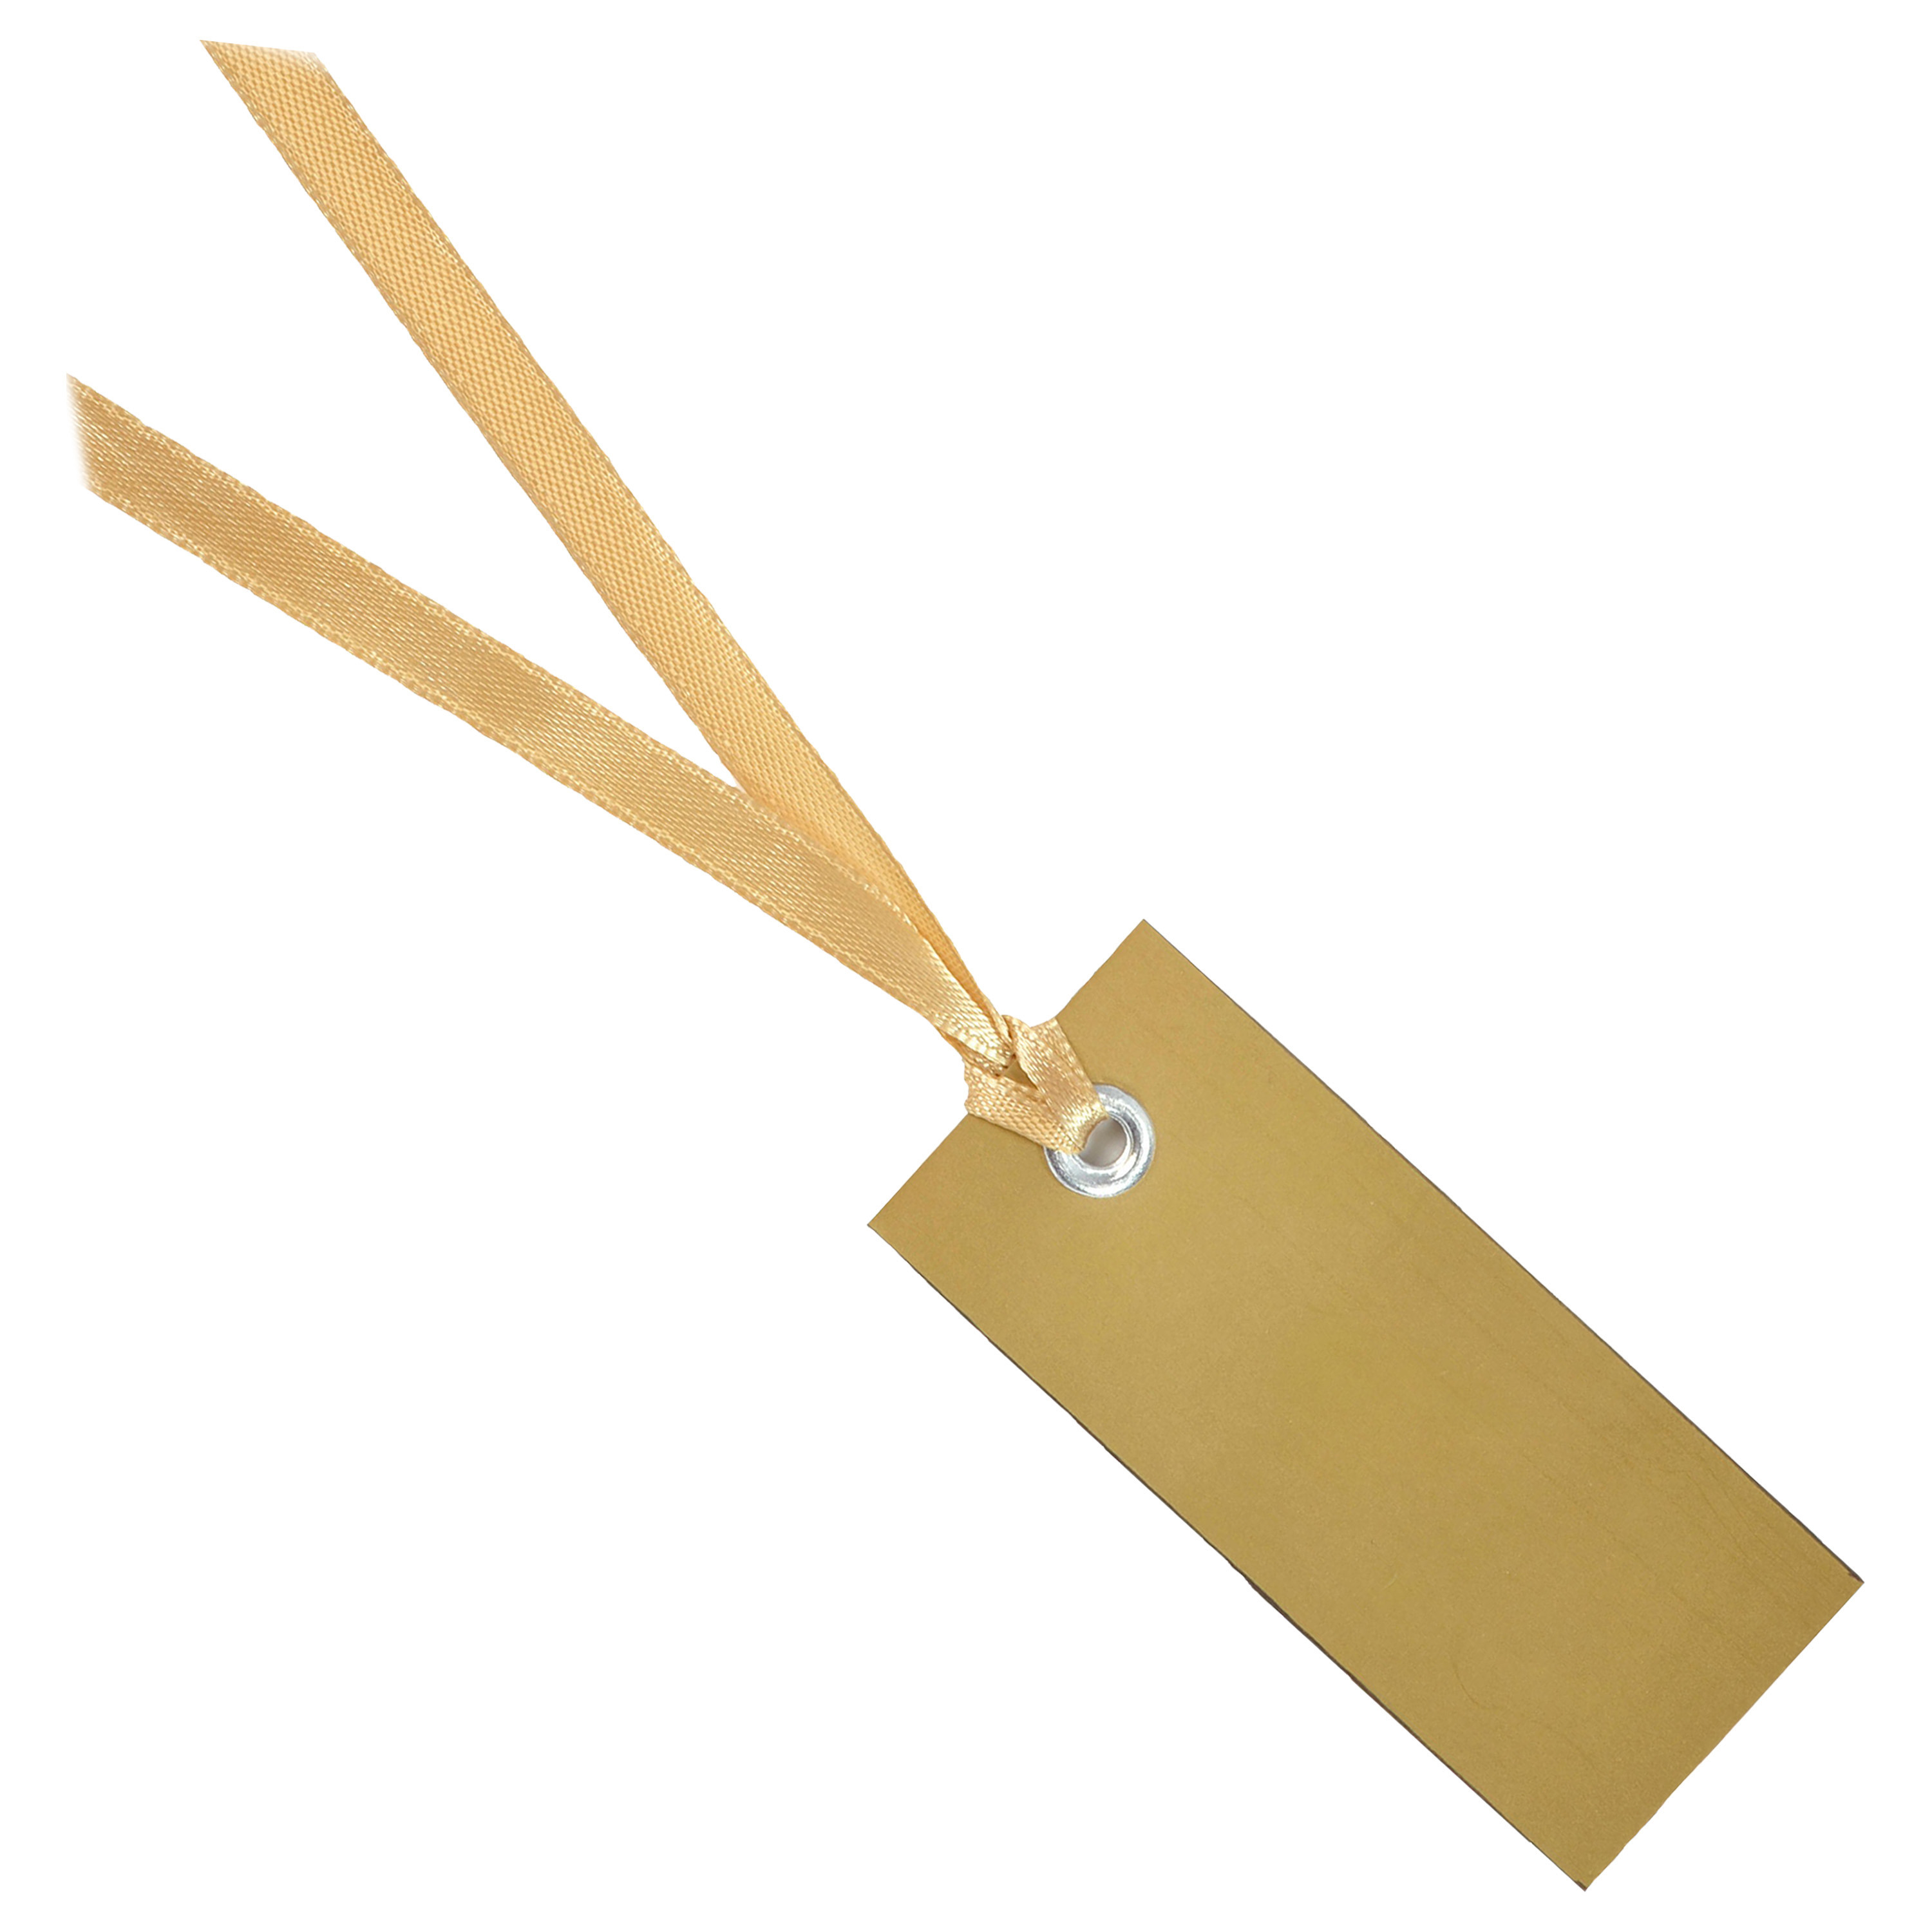 Santex cadeaulabels met lintje set 12x stuks goud 3 x 7 cm naam tags